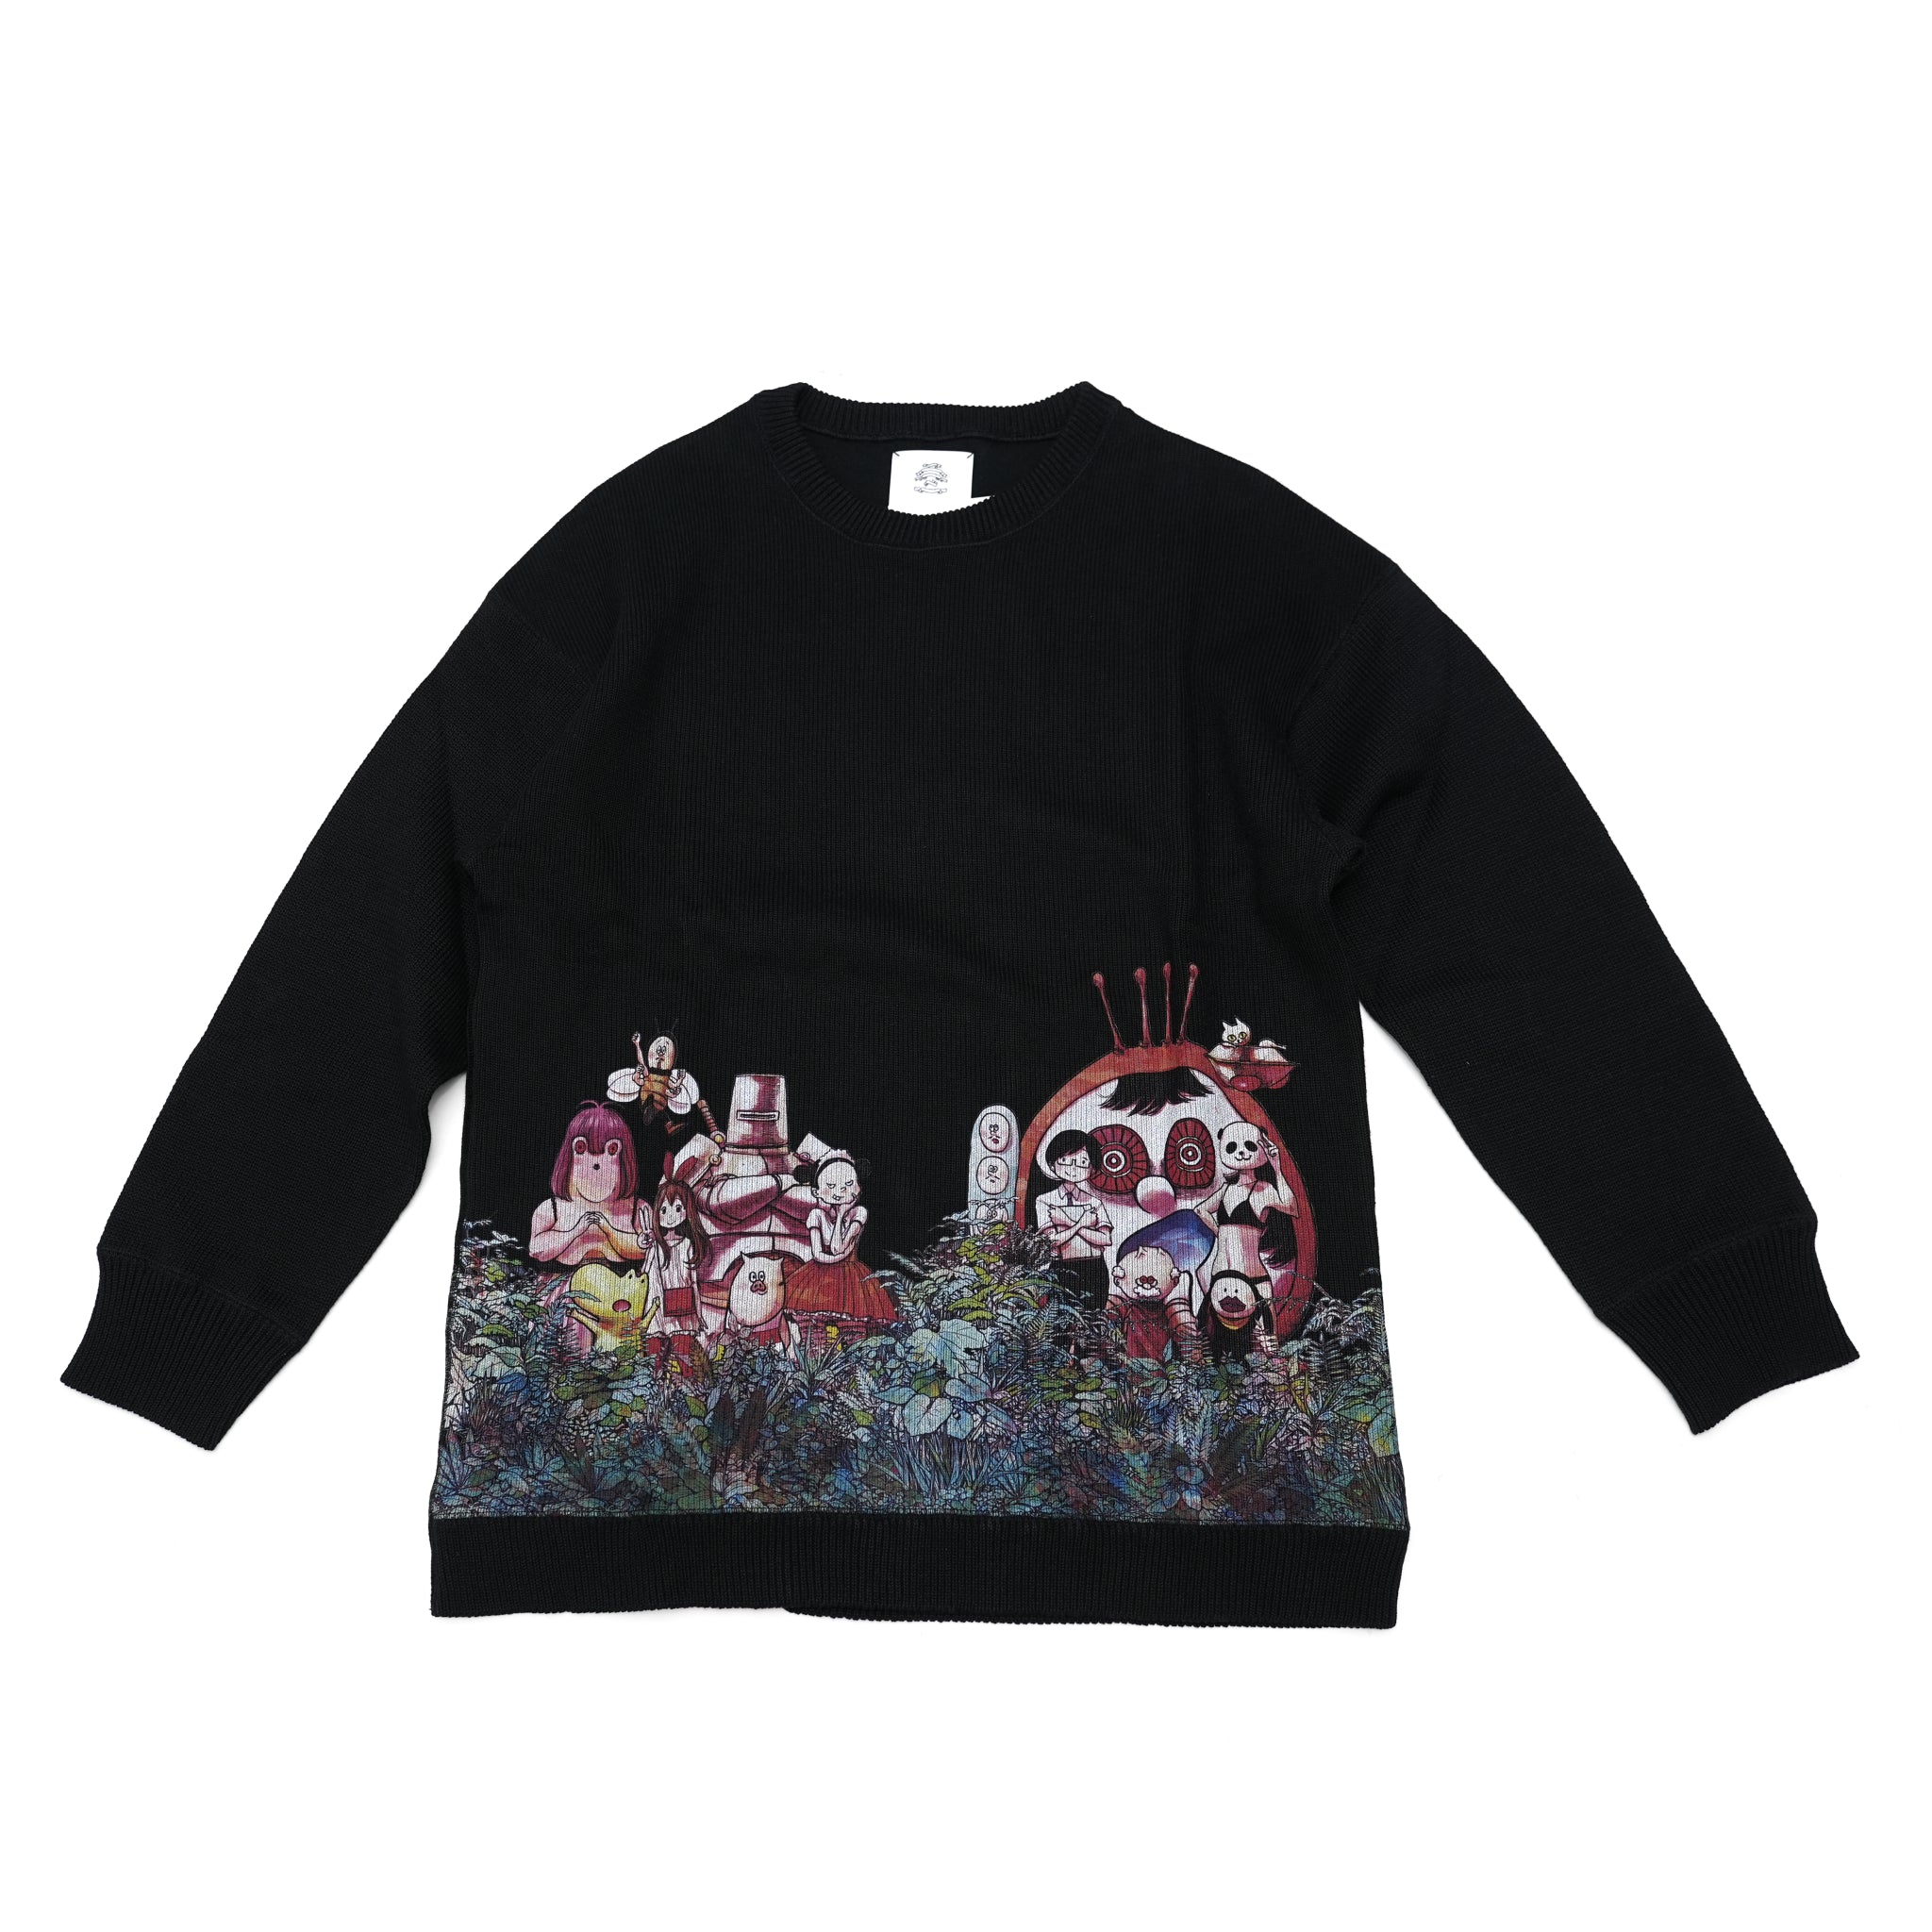 No:SF*IA-01 | Name:勇者たち Knit Sweater | Color:Black【浅野いにお × STOF 22AW SPECIAL ITEM】